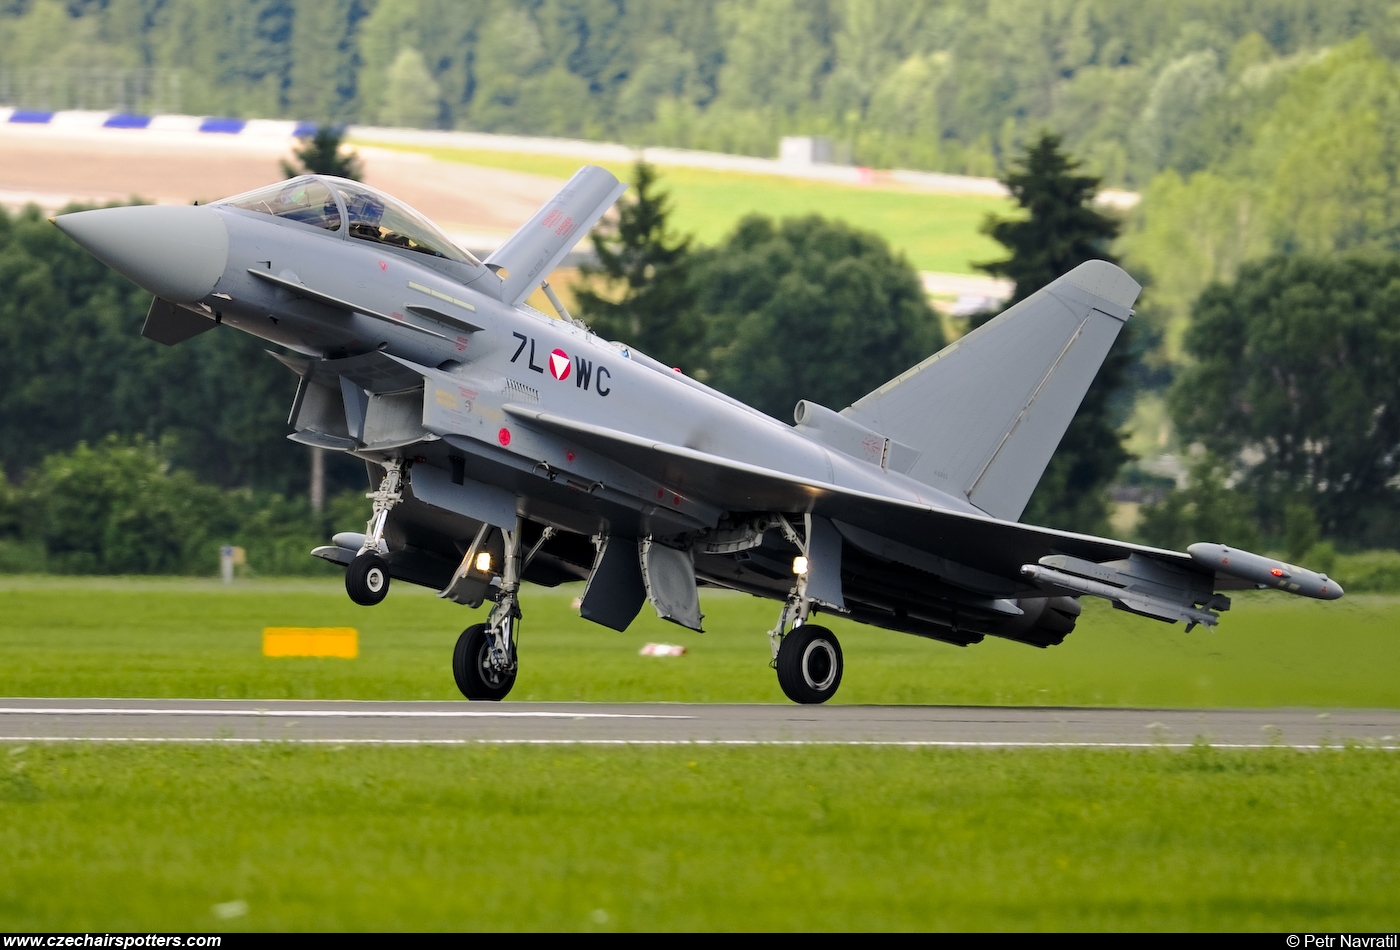 Austria - Air Force – Eurofighter EF-2000 Typhoon S 7L-WC